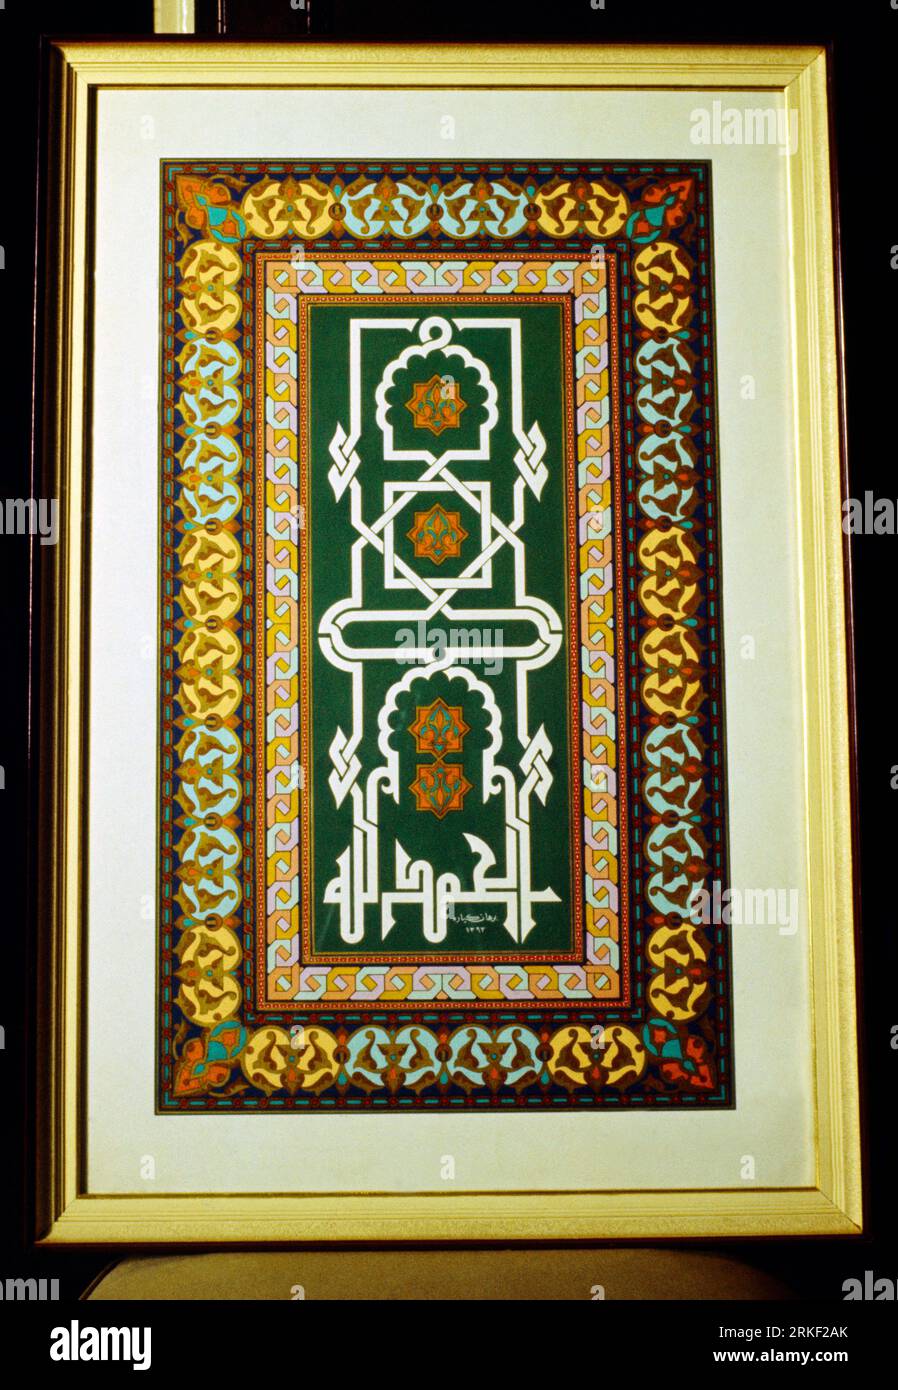 Islamic Art Arabic Calligraphy in Frame Stock Photo